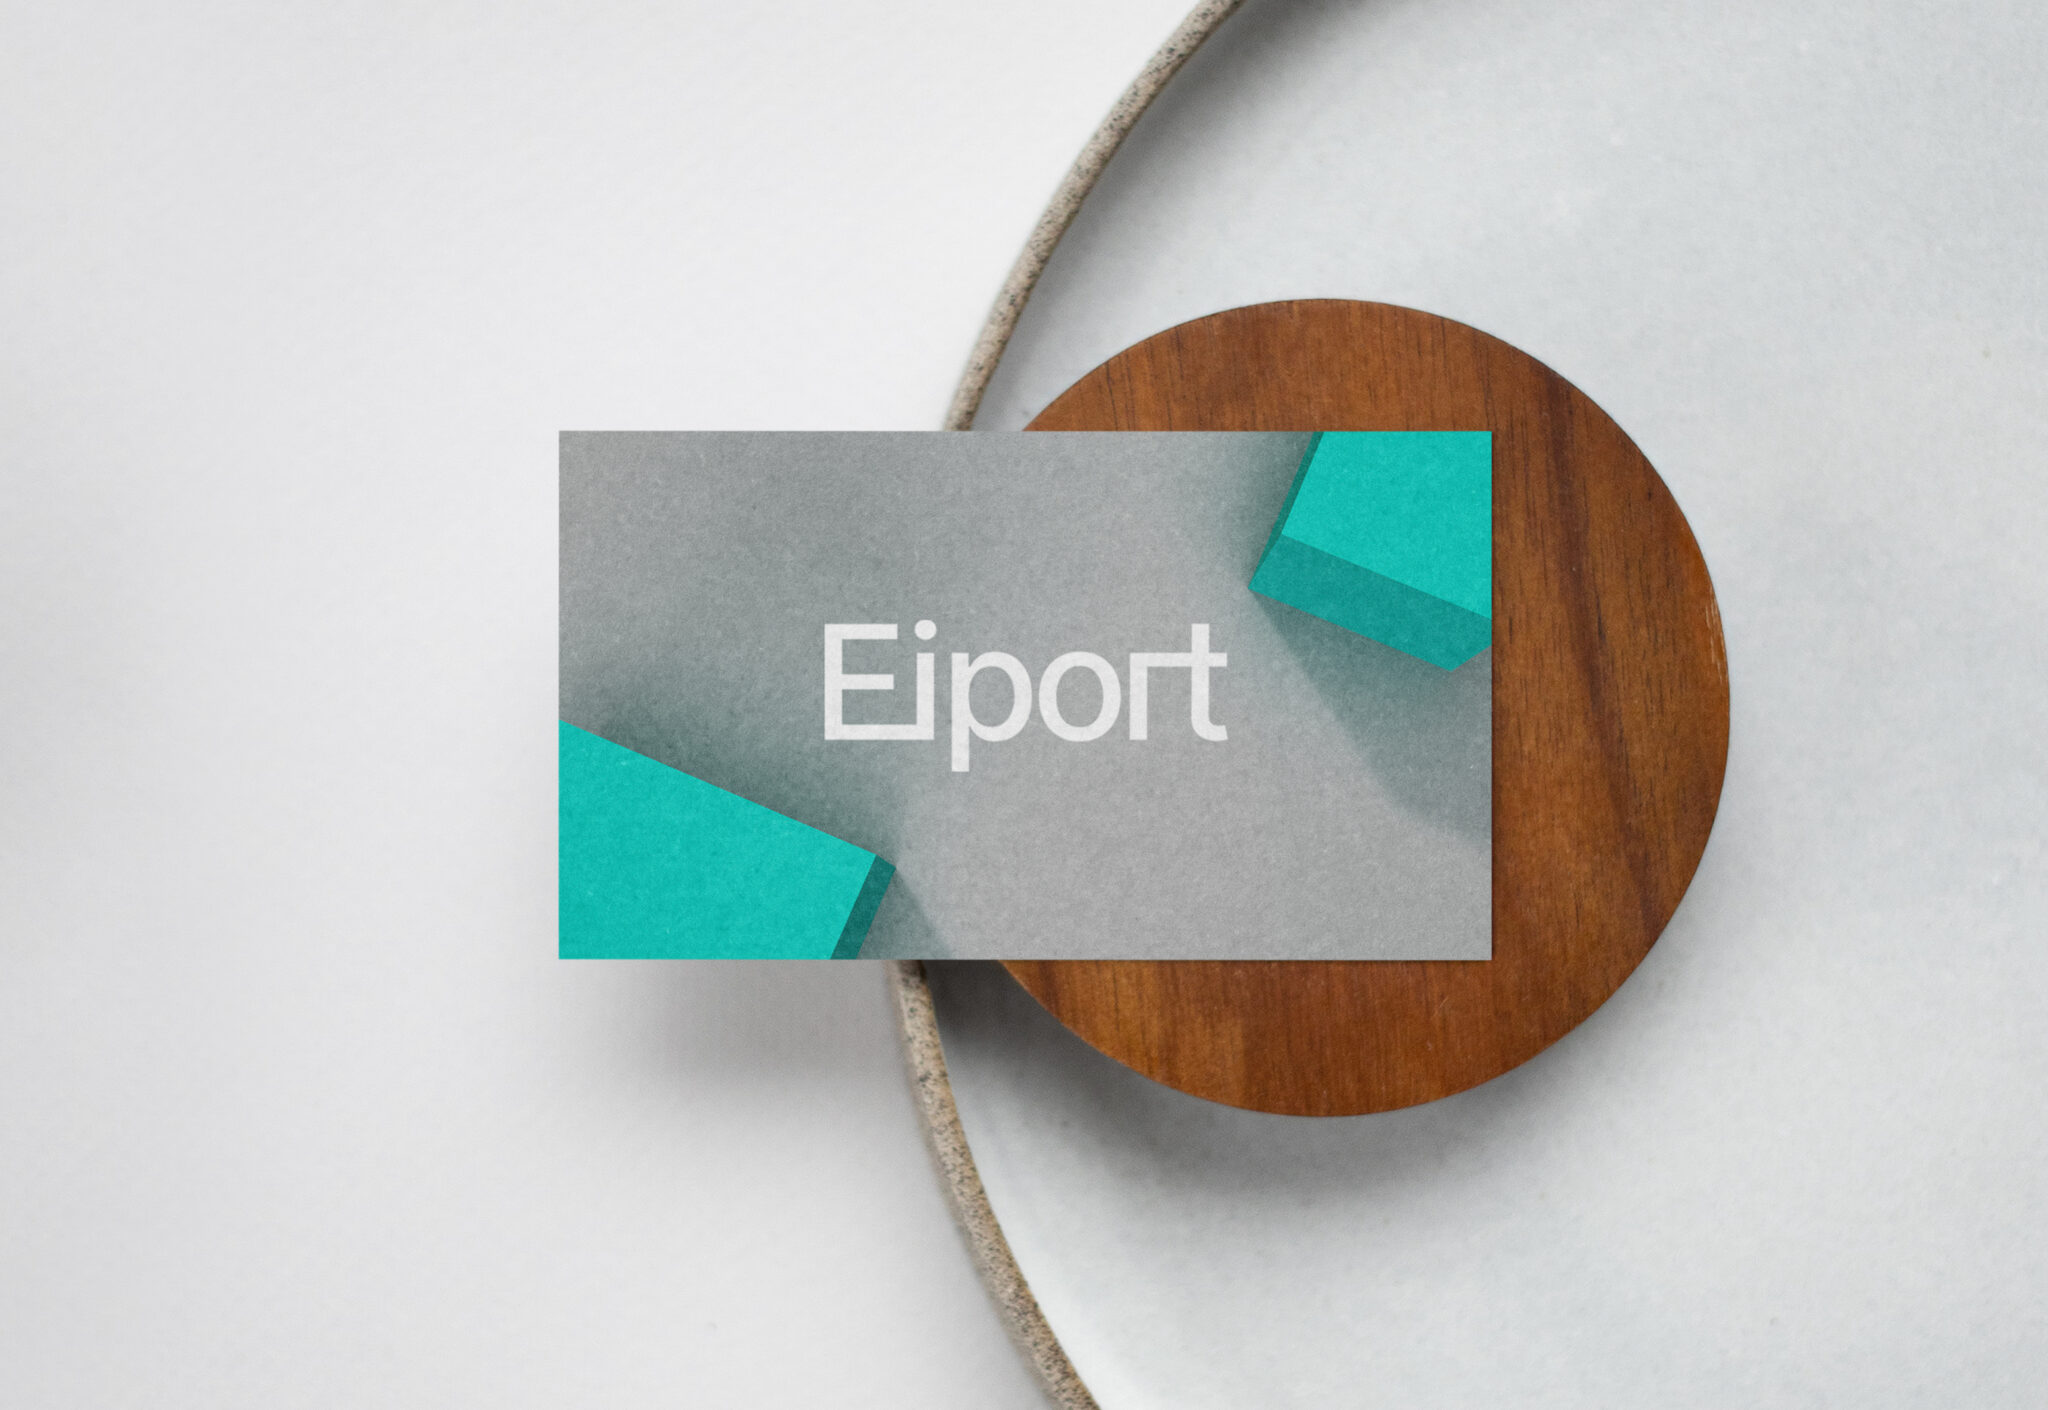 Eiport Business Card Design